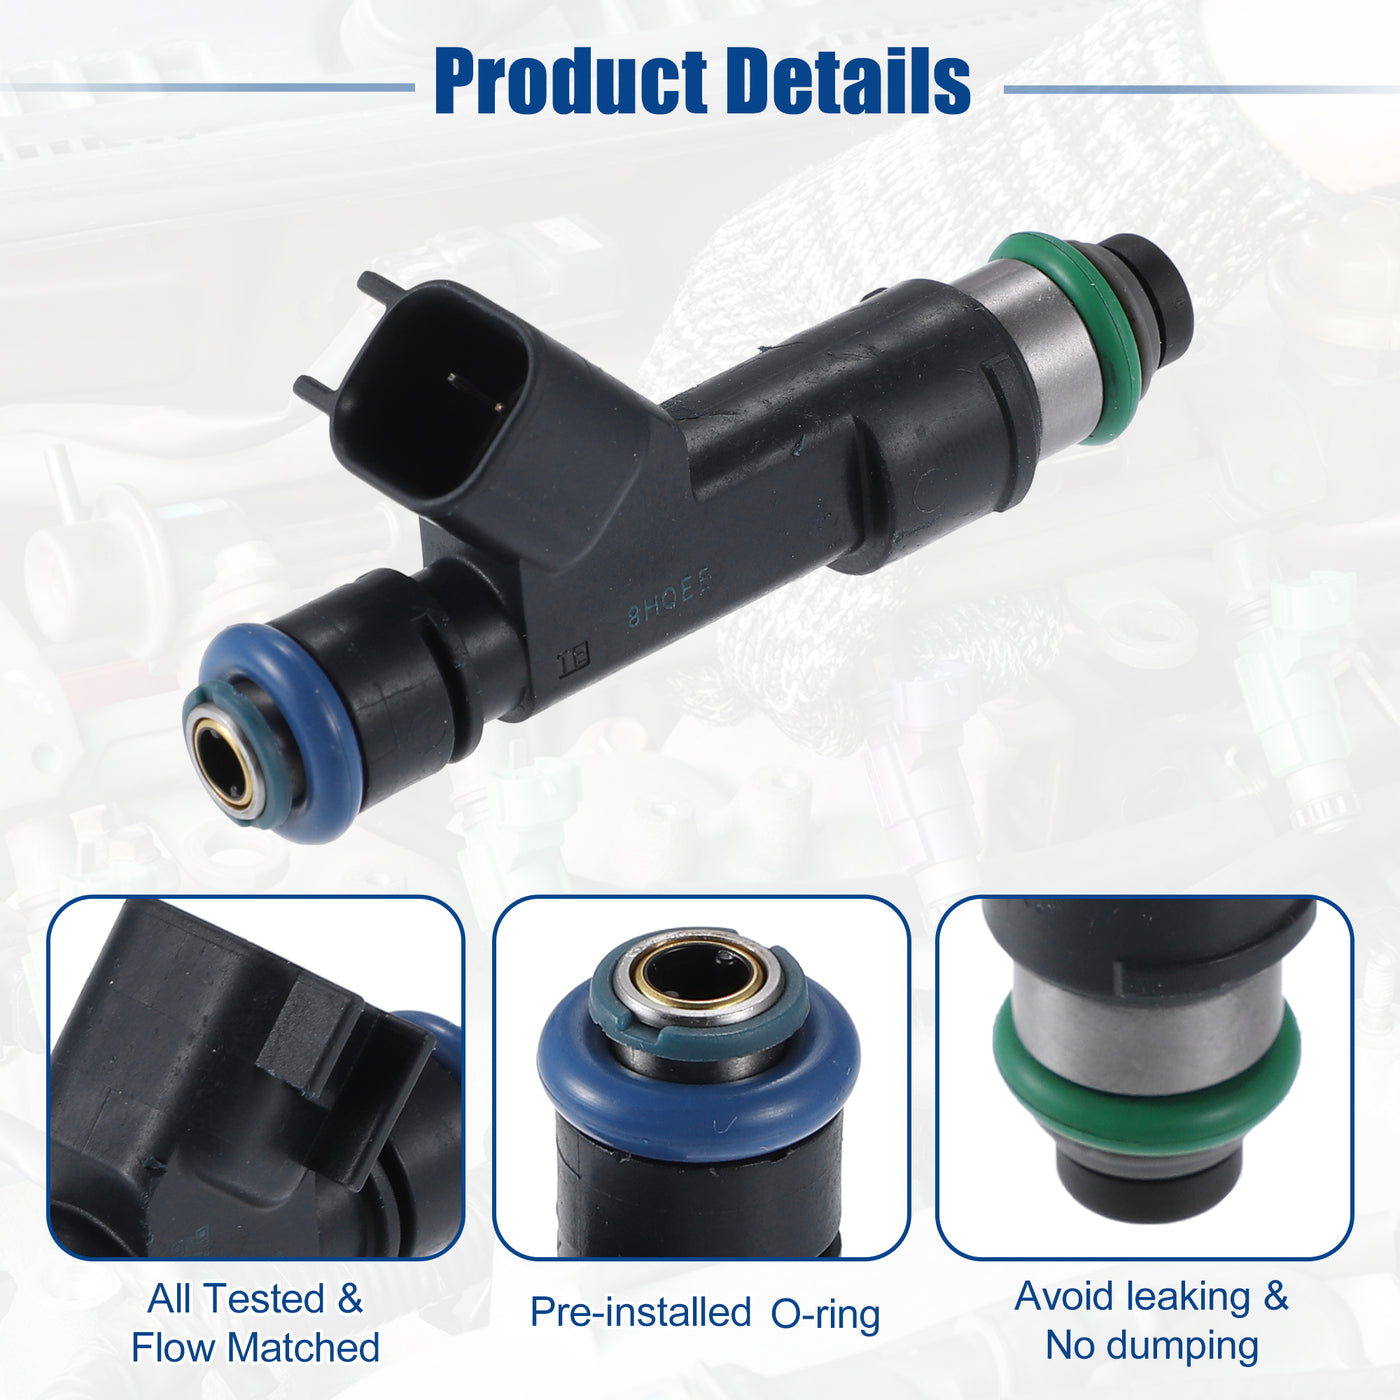 ACROPIX Car Fuel Injector Nozzle Replacement for Chevrolet Malibu Hybrid, LS, LT, LTZ 2.4L 2008-2012 No.12625029 - Pack of 4